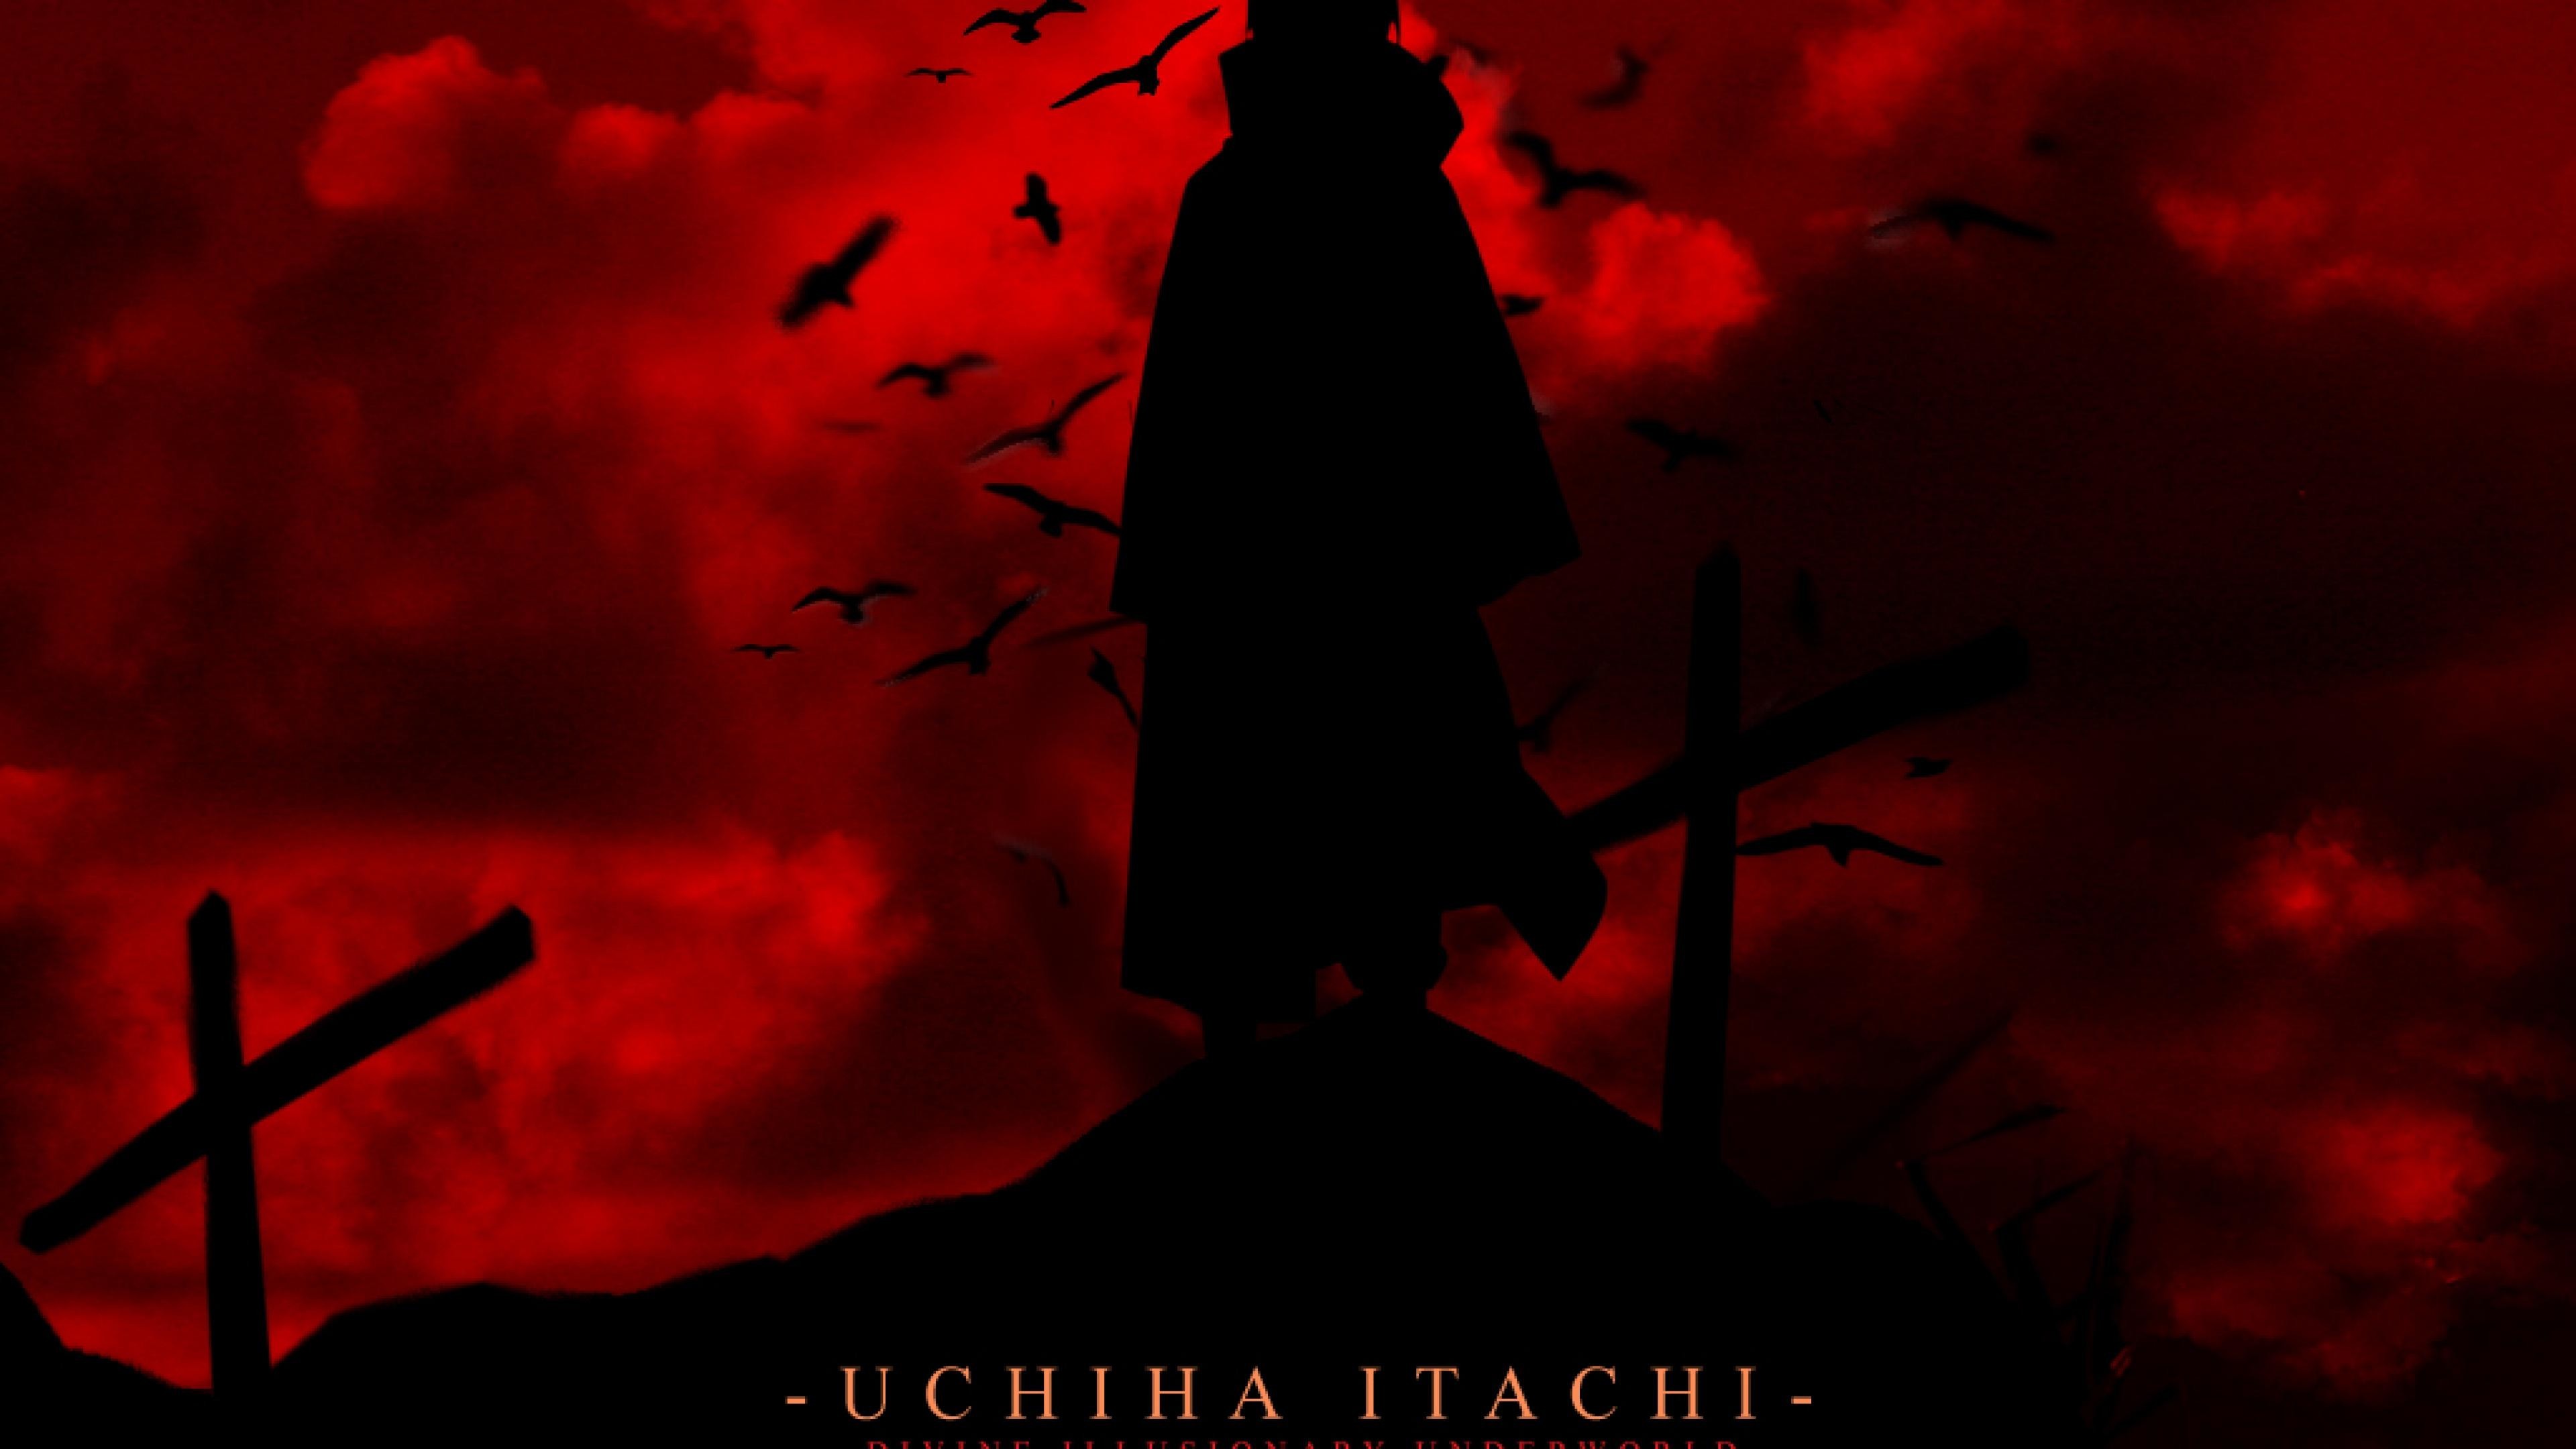 Itachi Uchiha 4K Digital Art Wallpapers